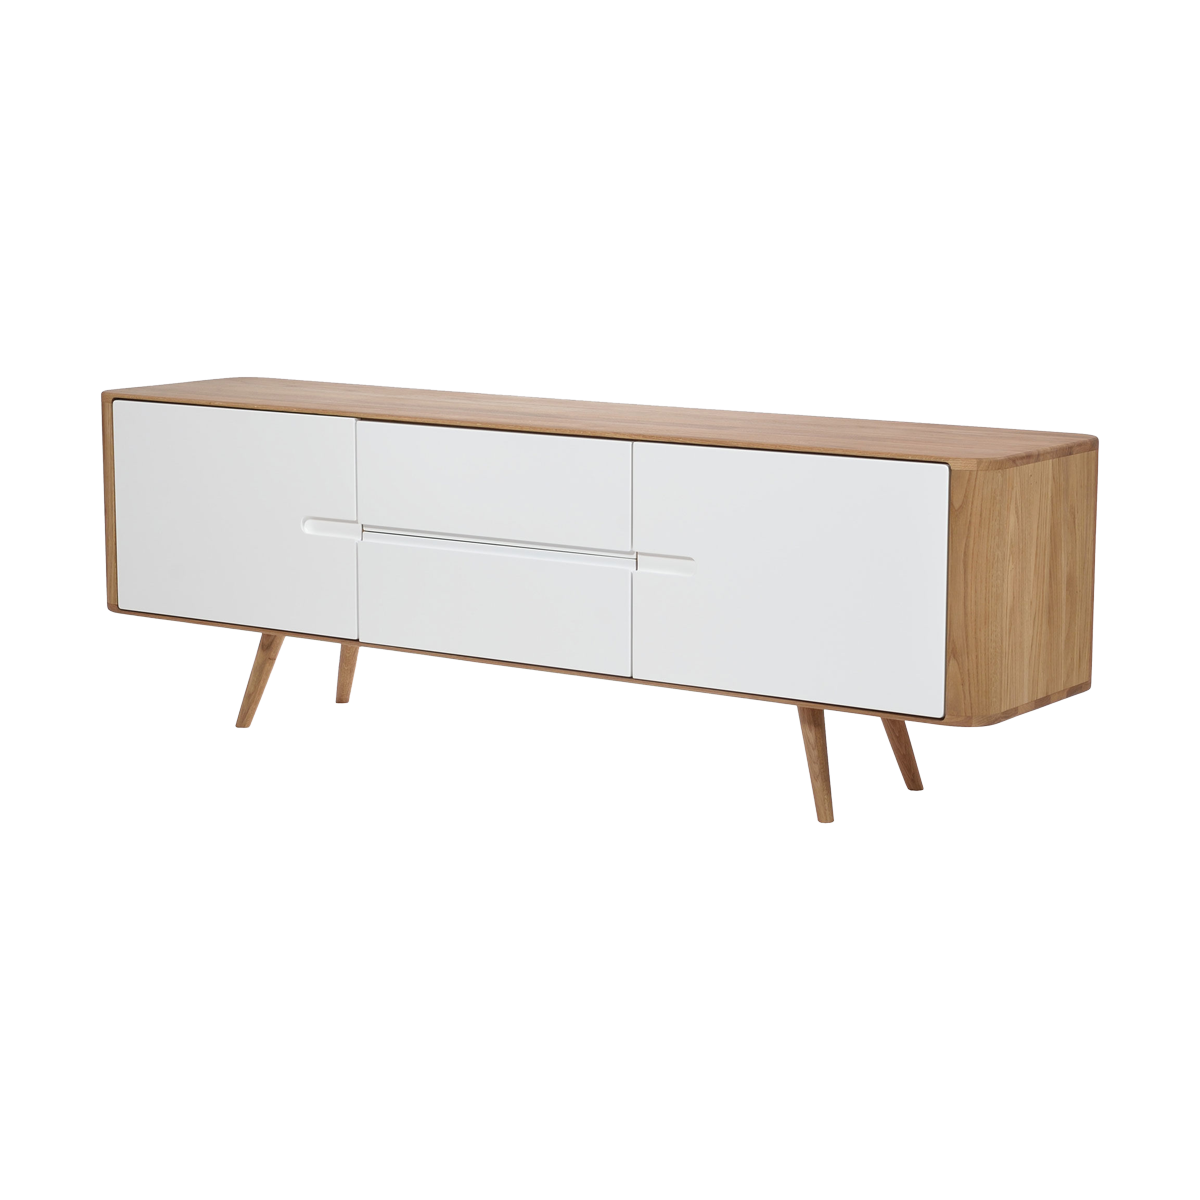 Ena sideboard houten dressoir naturel - 180 cm